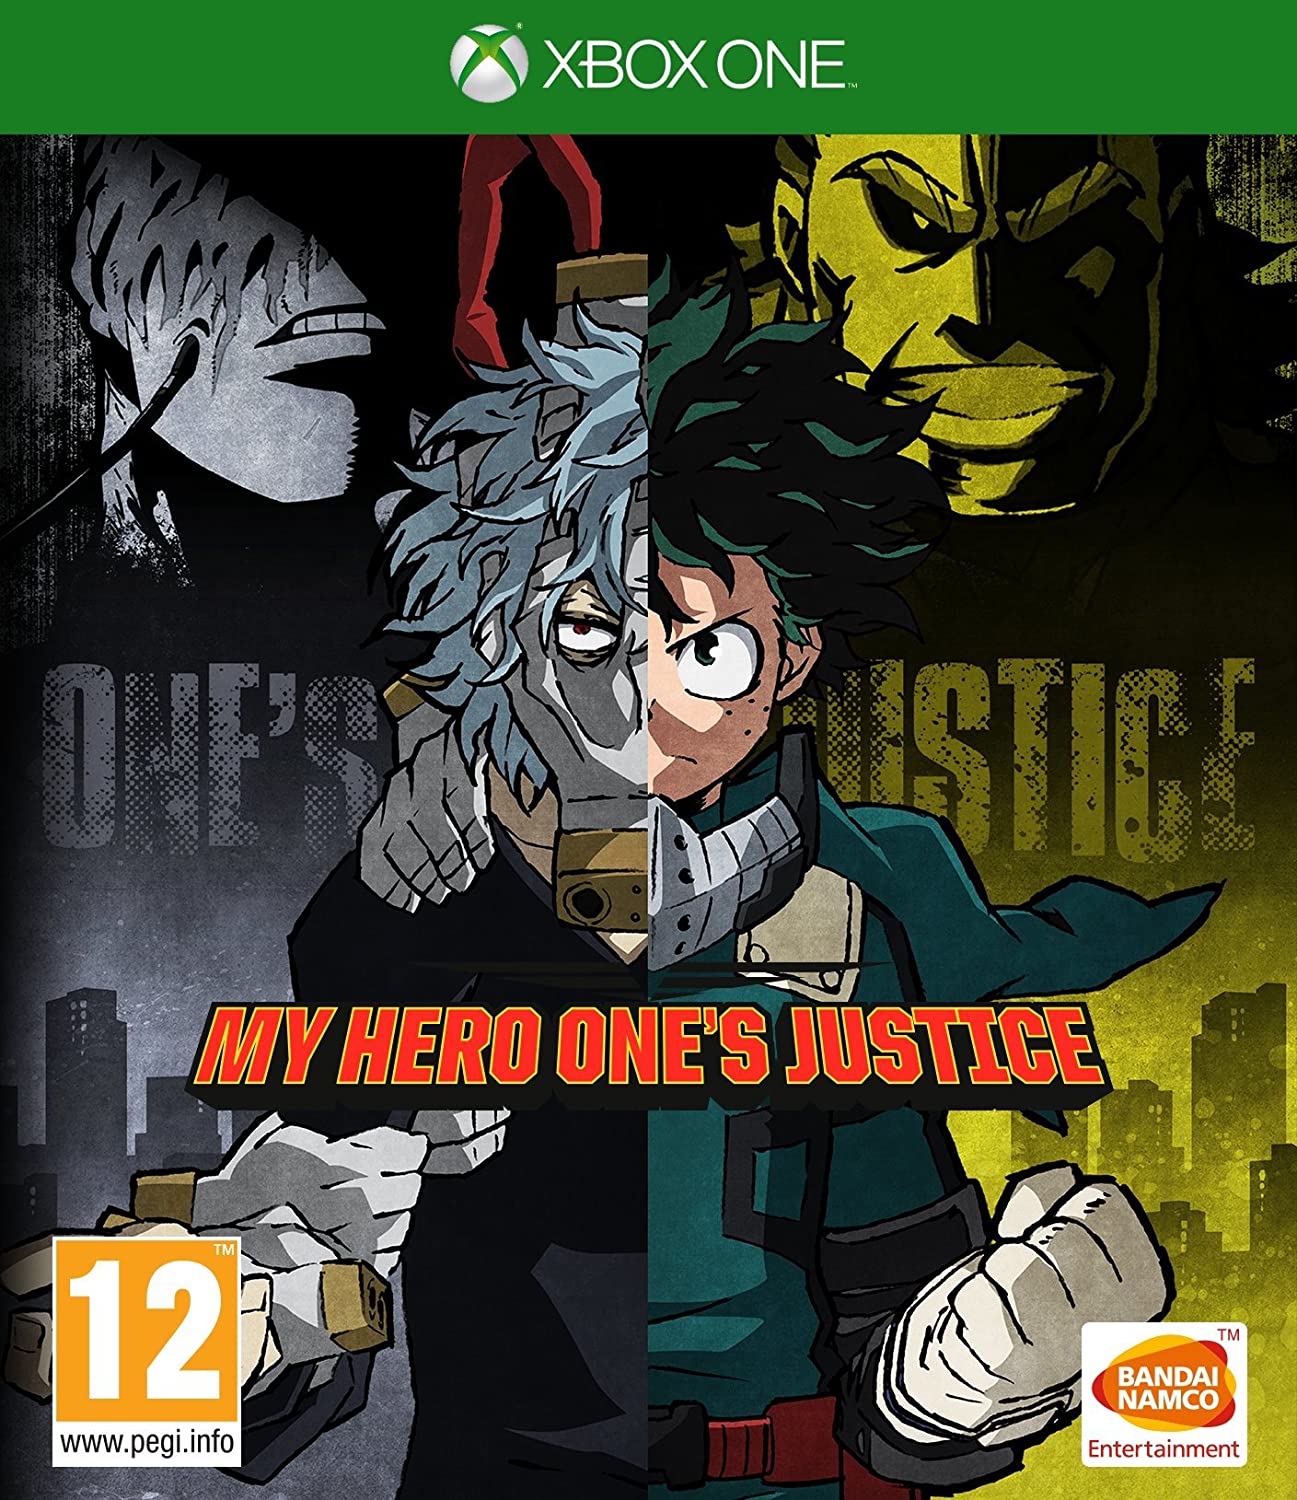 My Hero One's Justice, Bandai Namco, Xbox One, 722674221504 - image 1 of 6